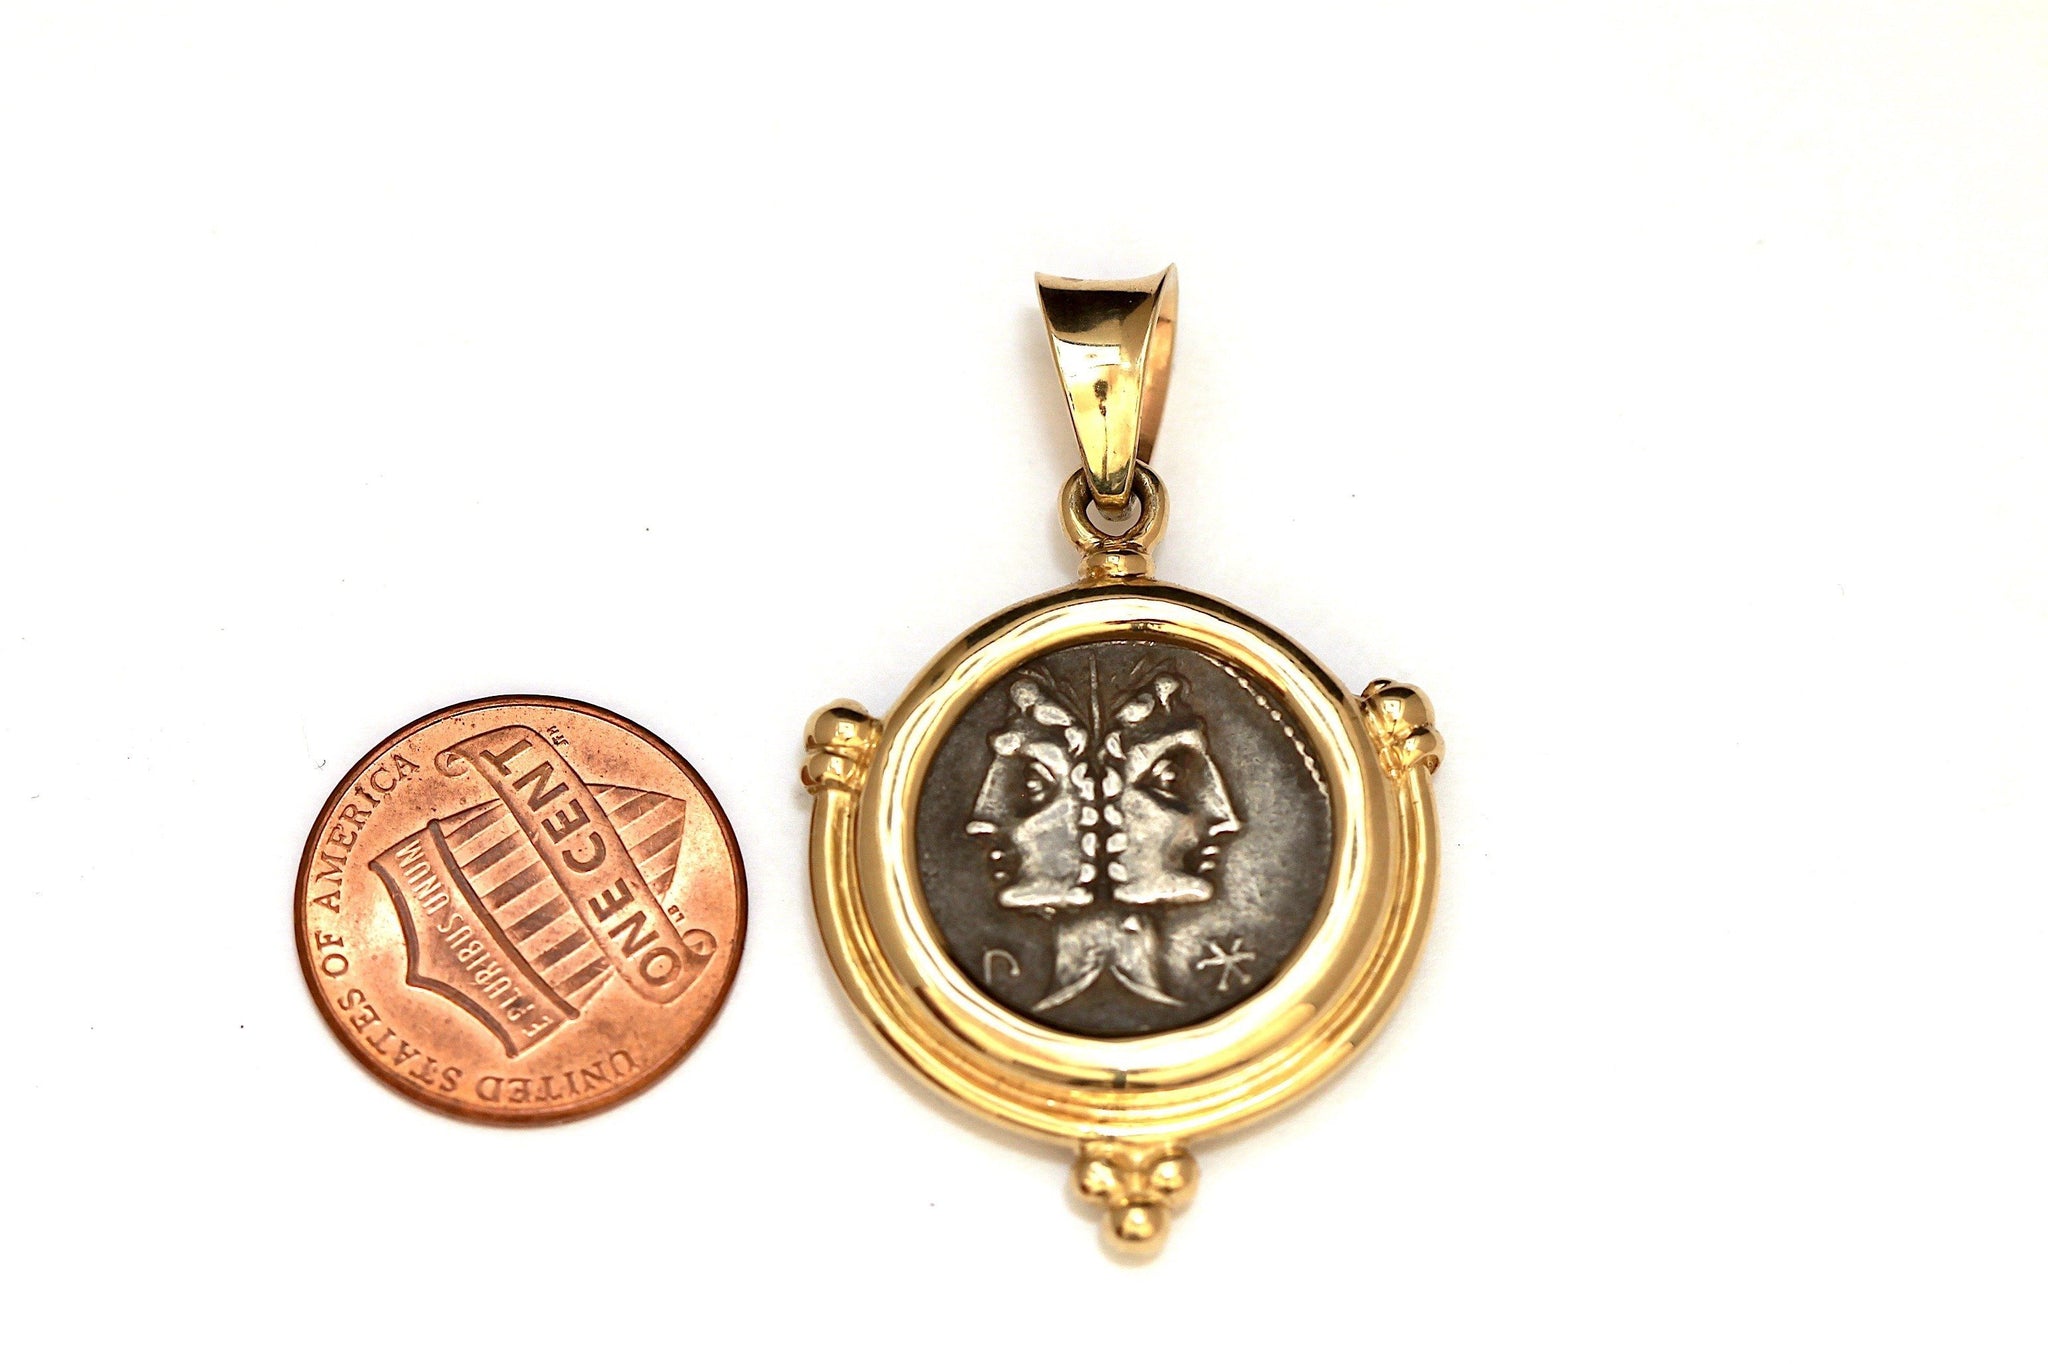 14K Gold Pendant, Roman Republic Coin, C. Fonteius ID13141 - Erez Ancient Coin Jewelry 